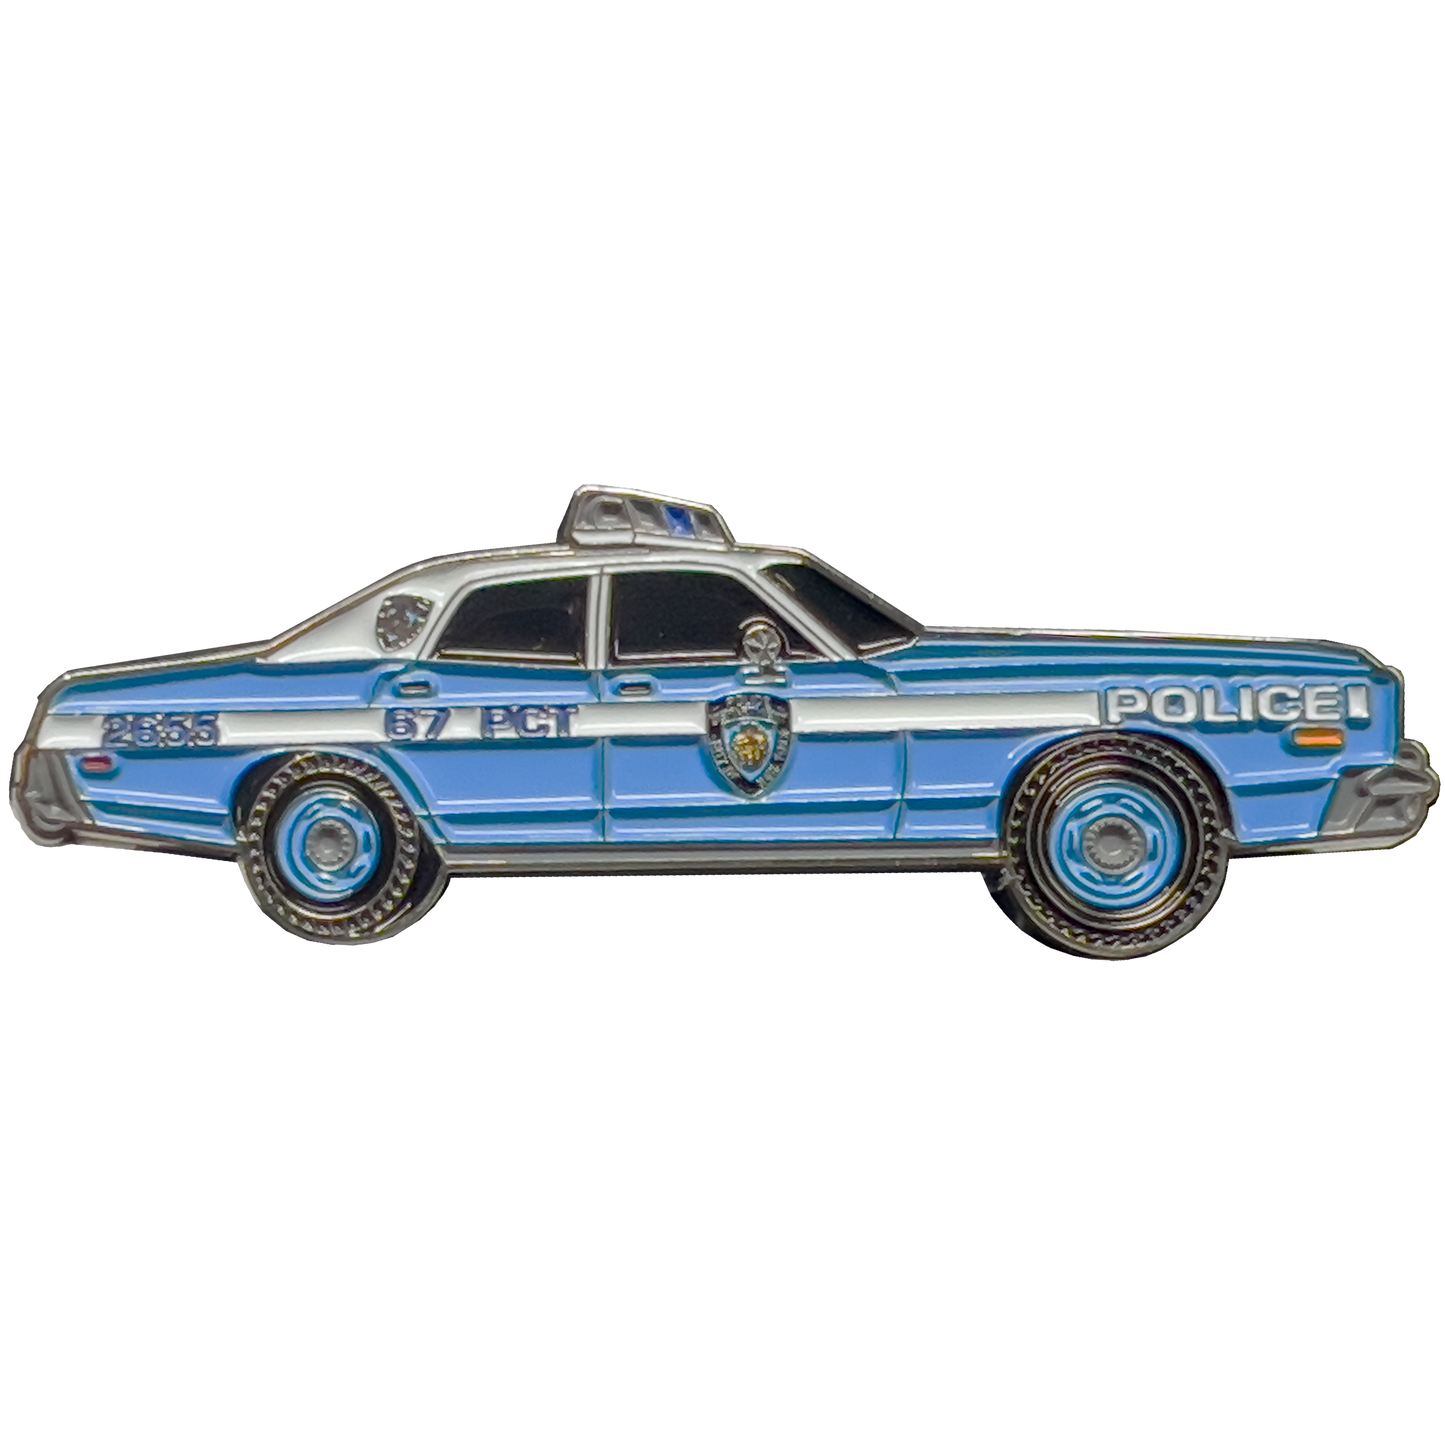 GL7-002 NYPD Vintage Police Car Challenge Coin New York City Police Officer Serpico Kojak era